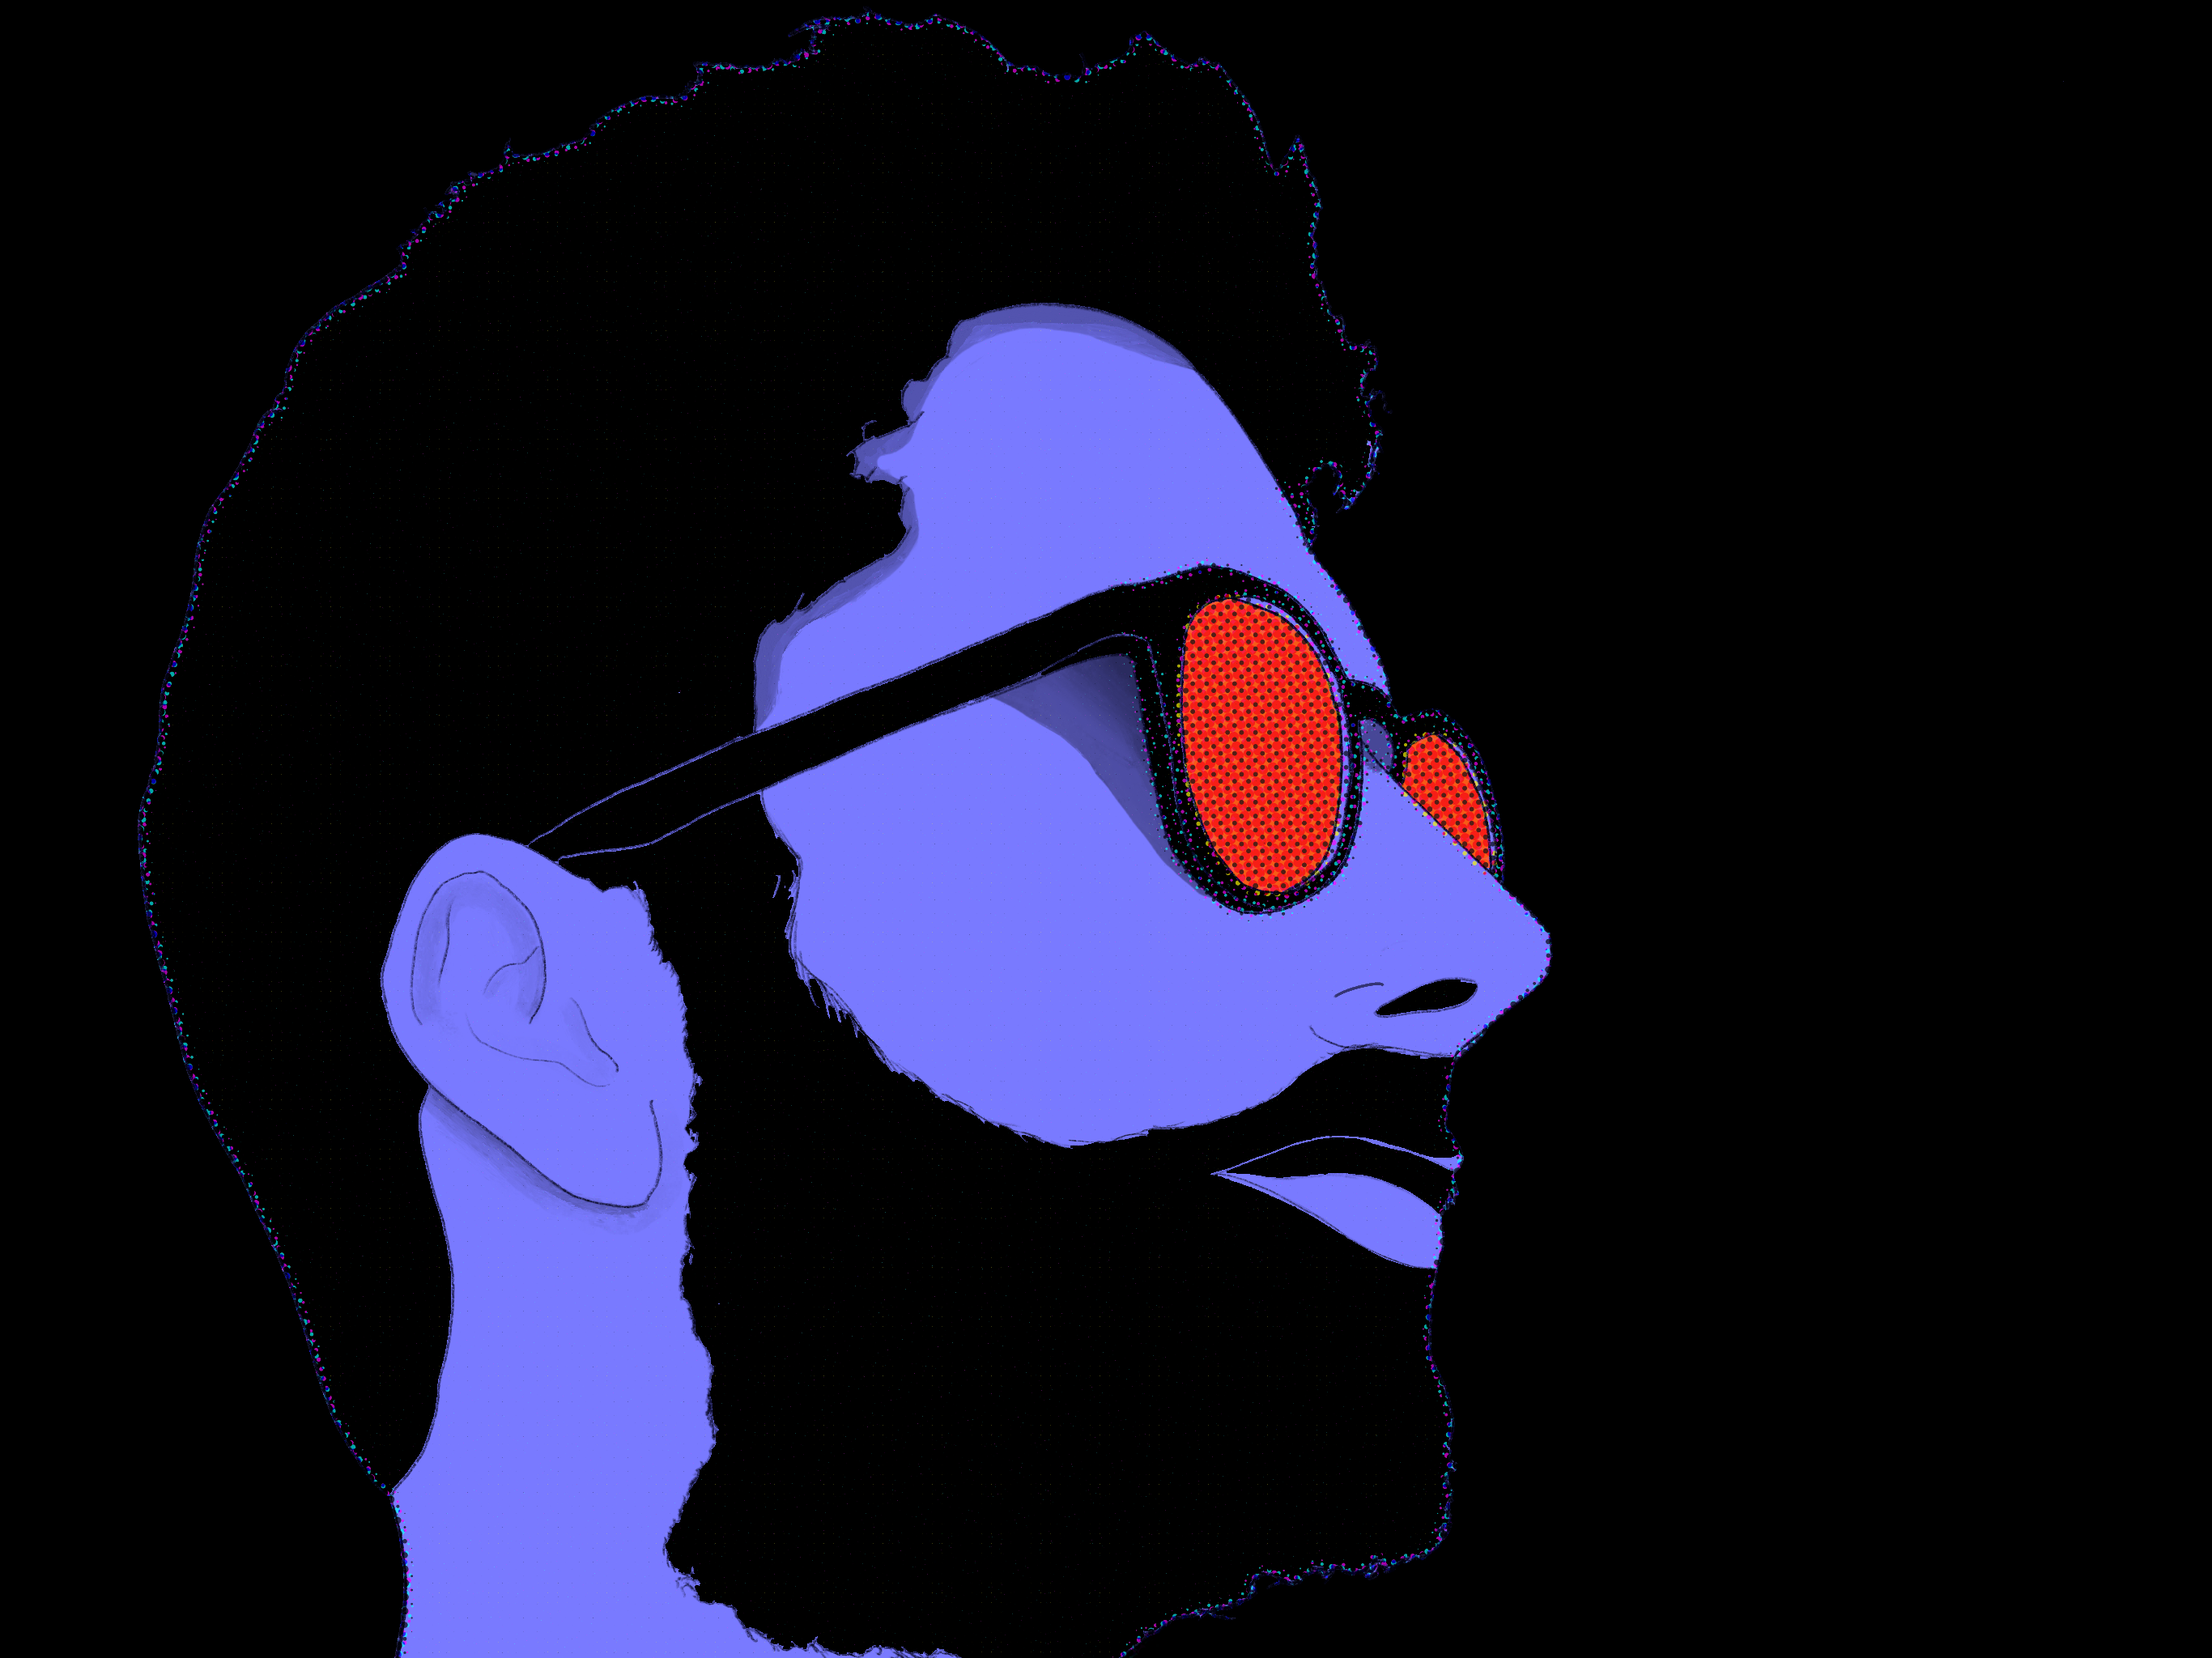 Art of man with a beard wearing sunglasses